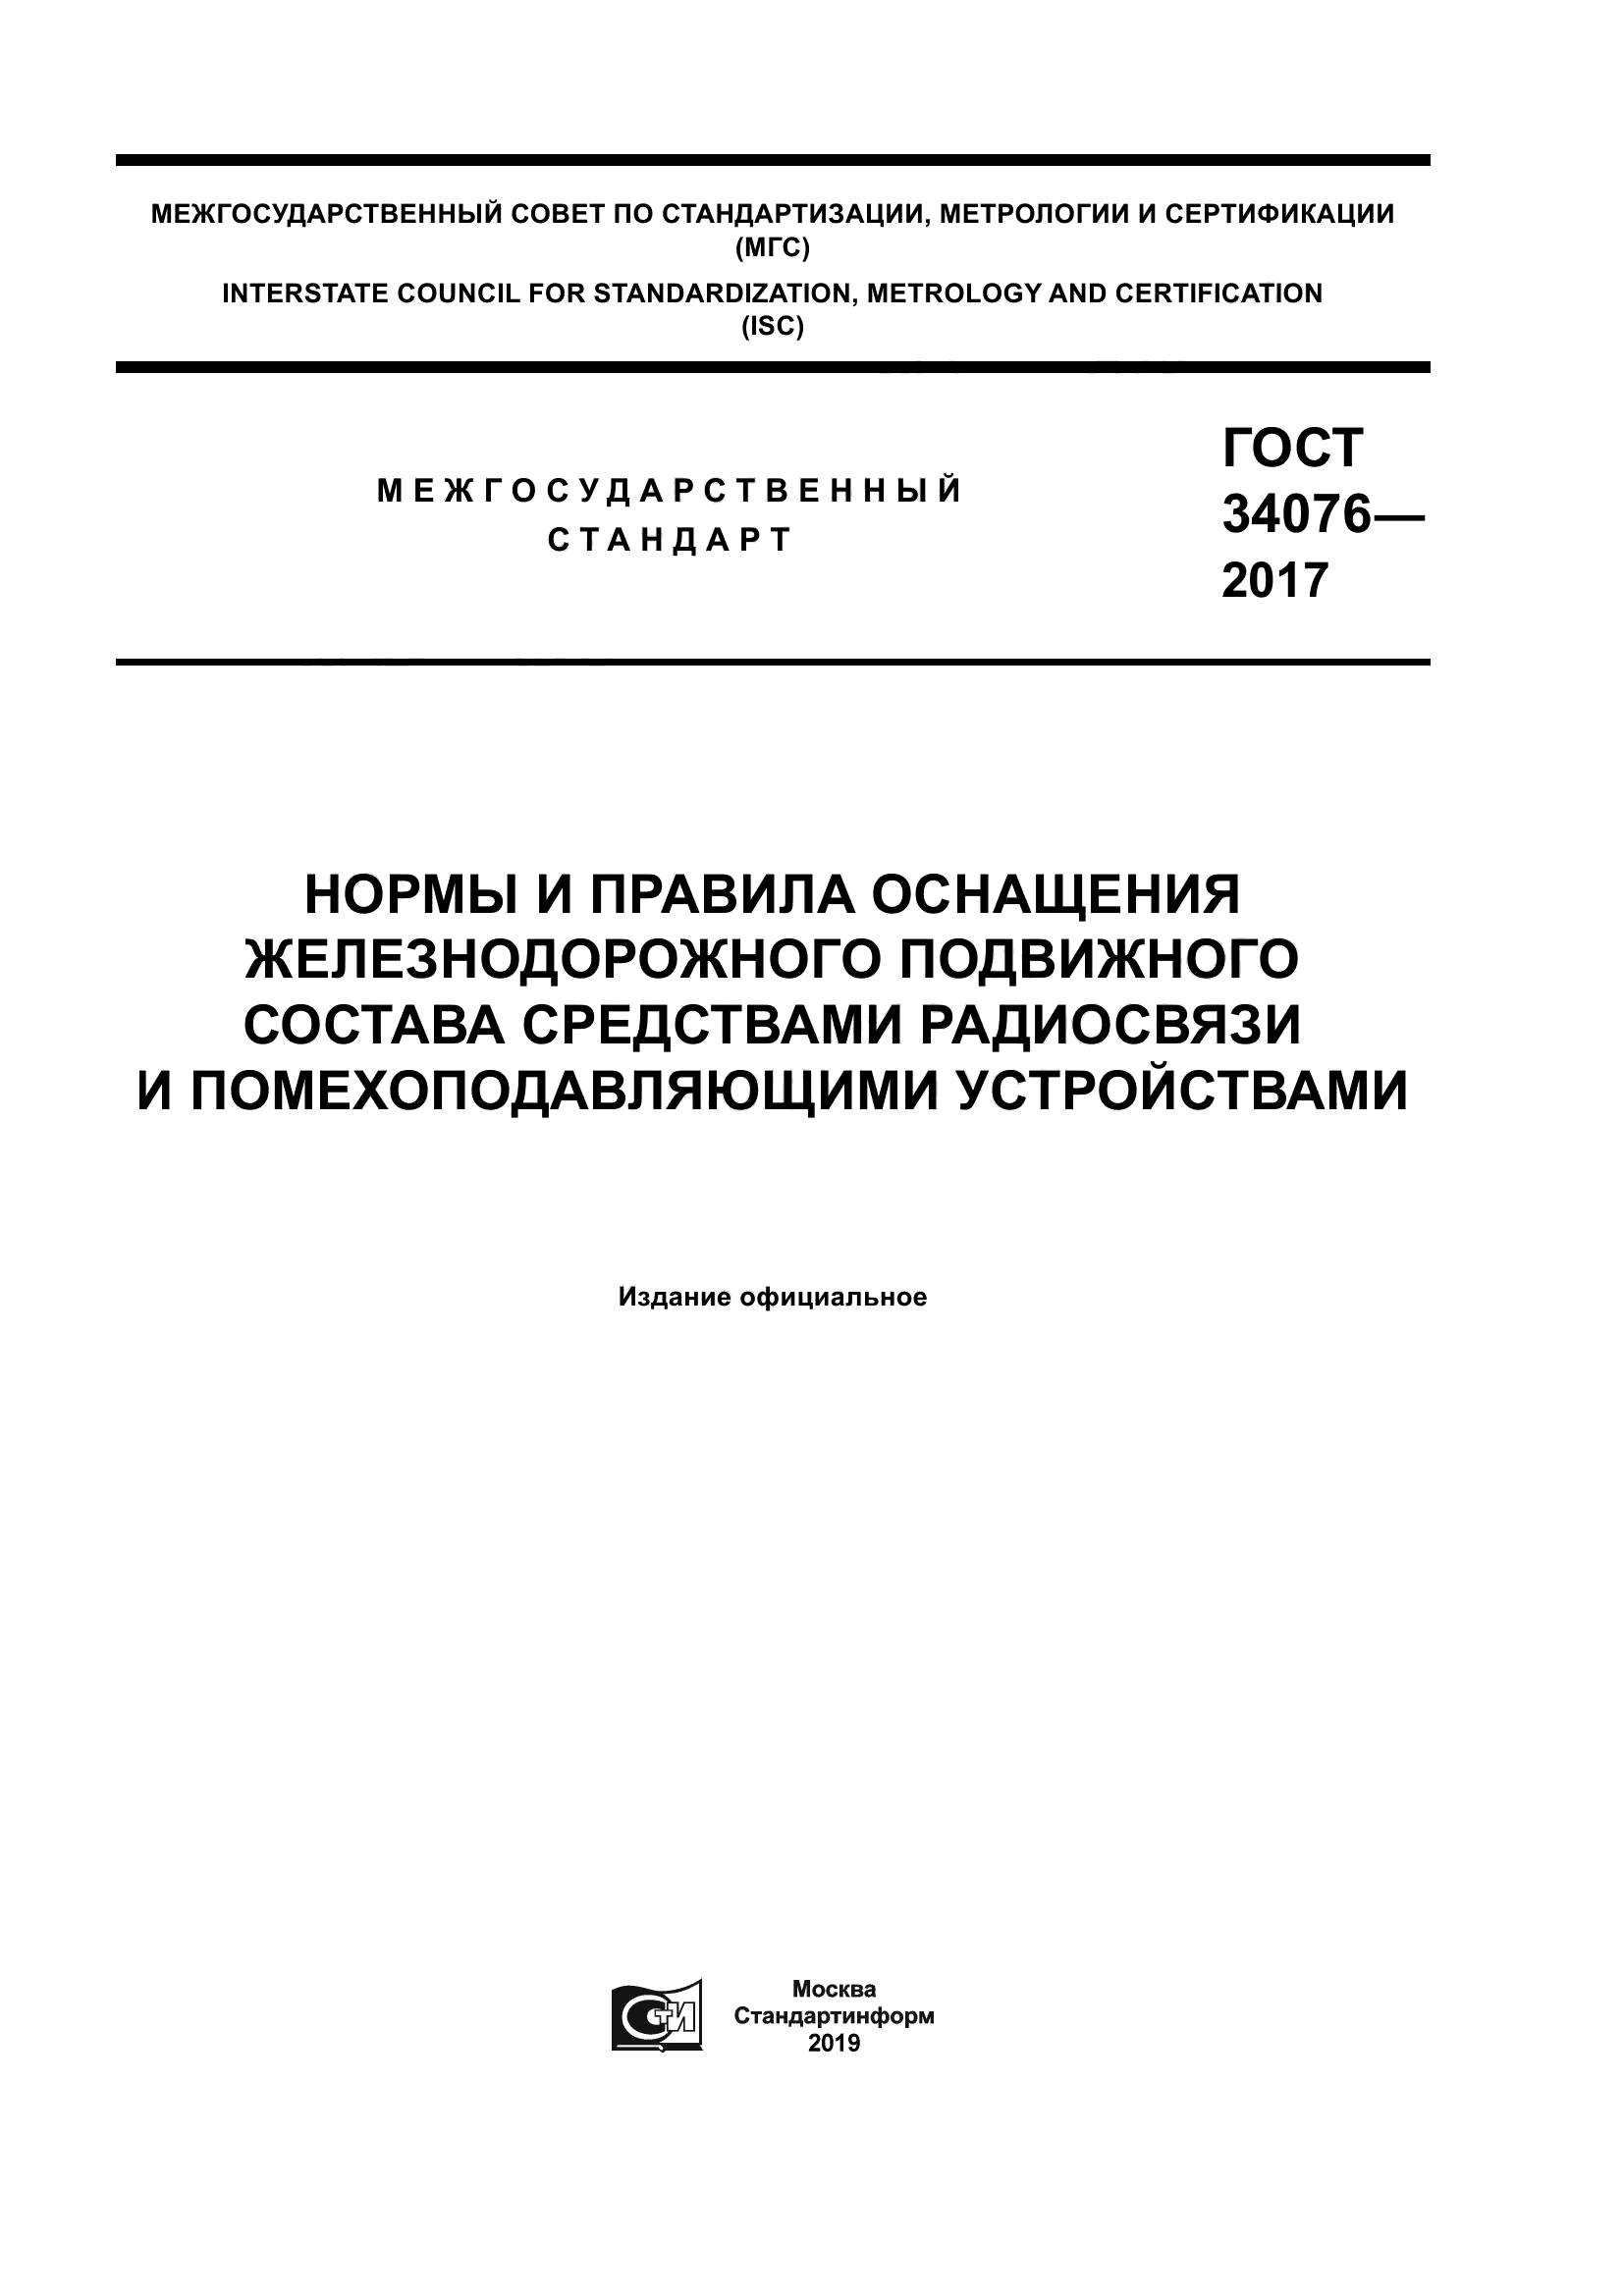 ГОСТ 34076-2017